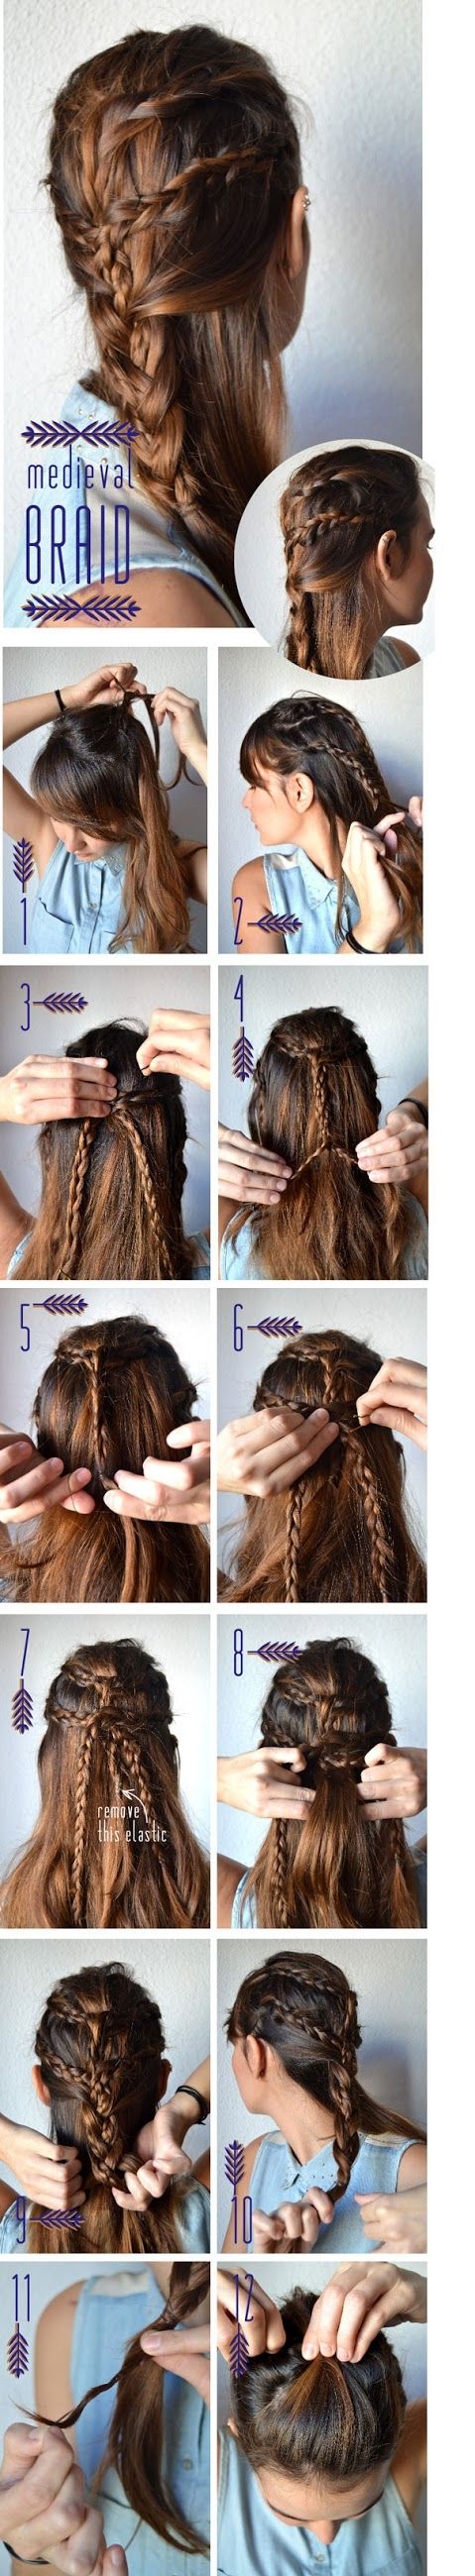 Medieval braid hairstyle guide